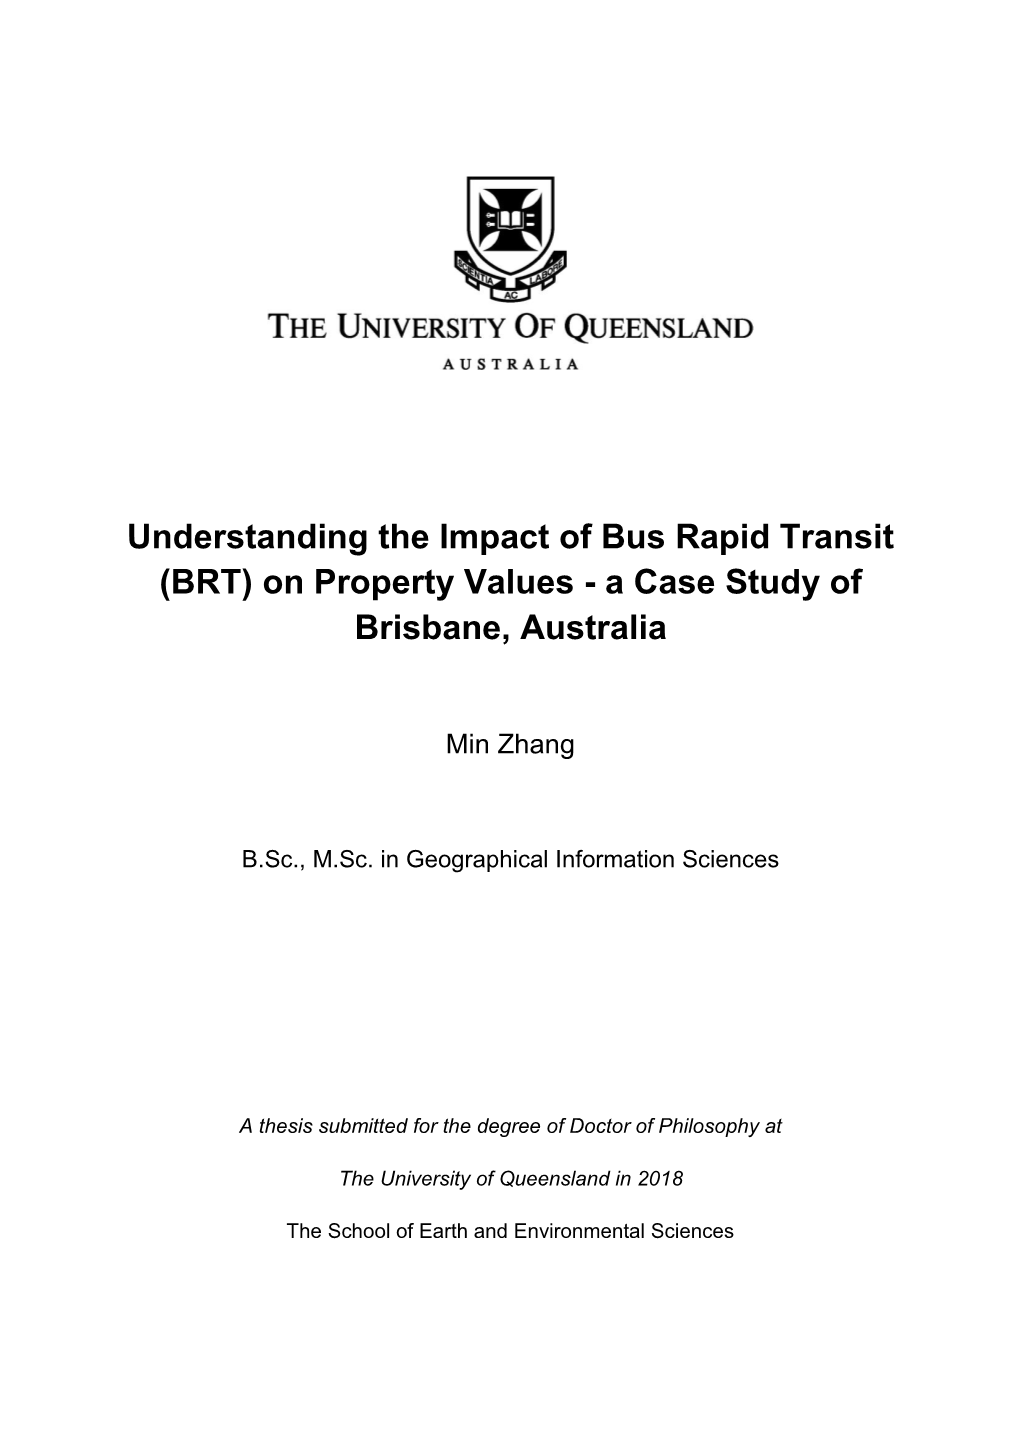 Understanding the Impact of Bus Rapid Transit (BRT) on Property Values - a Case Study of Brisbane, Australia